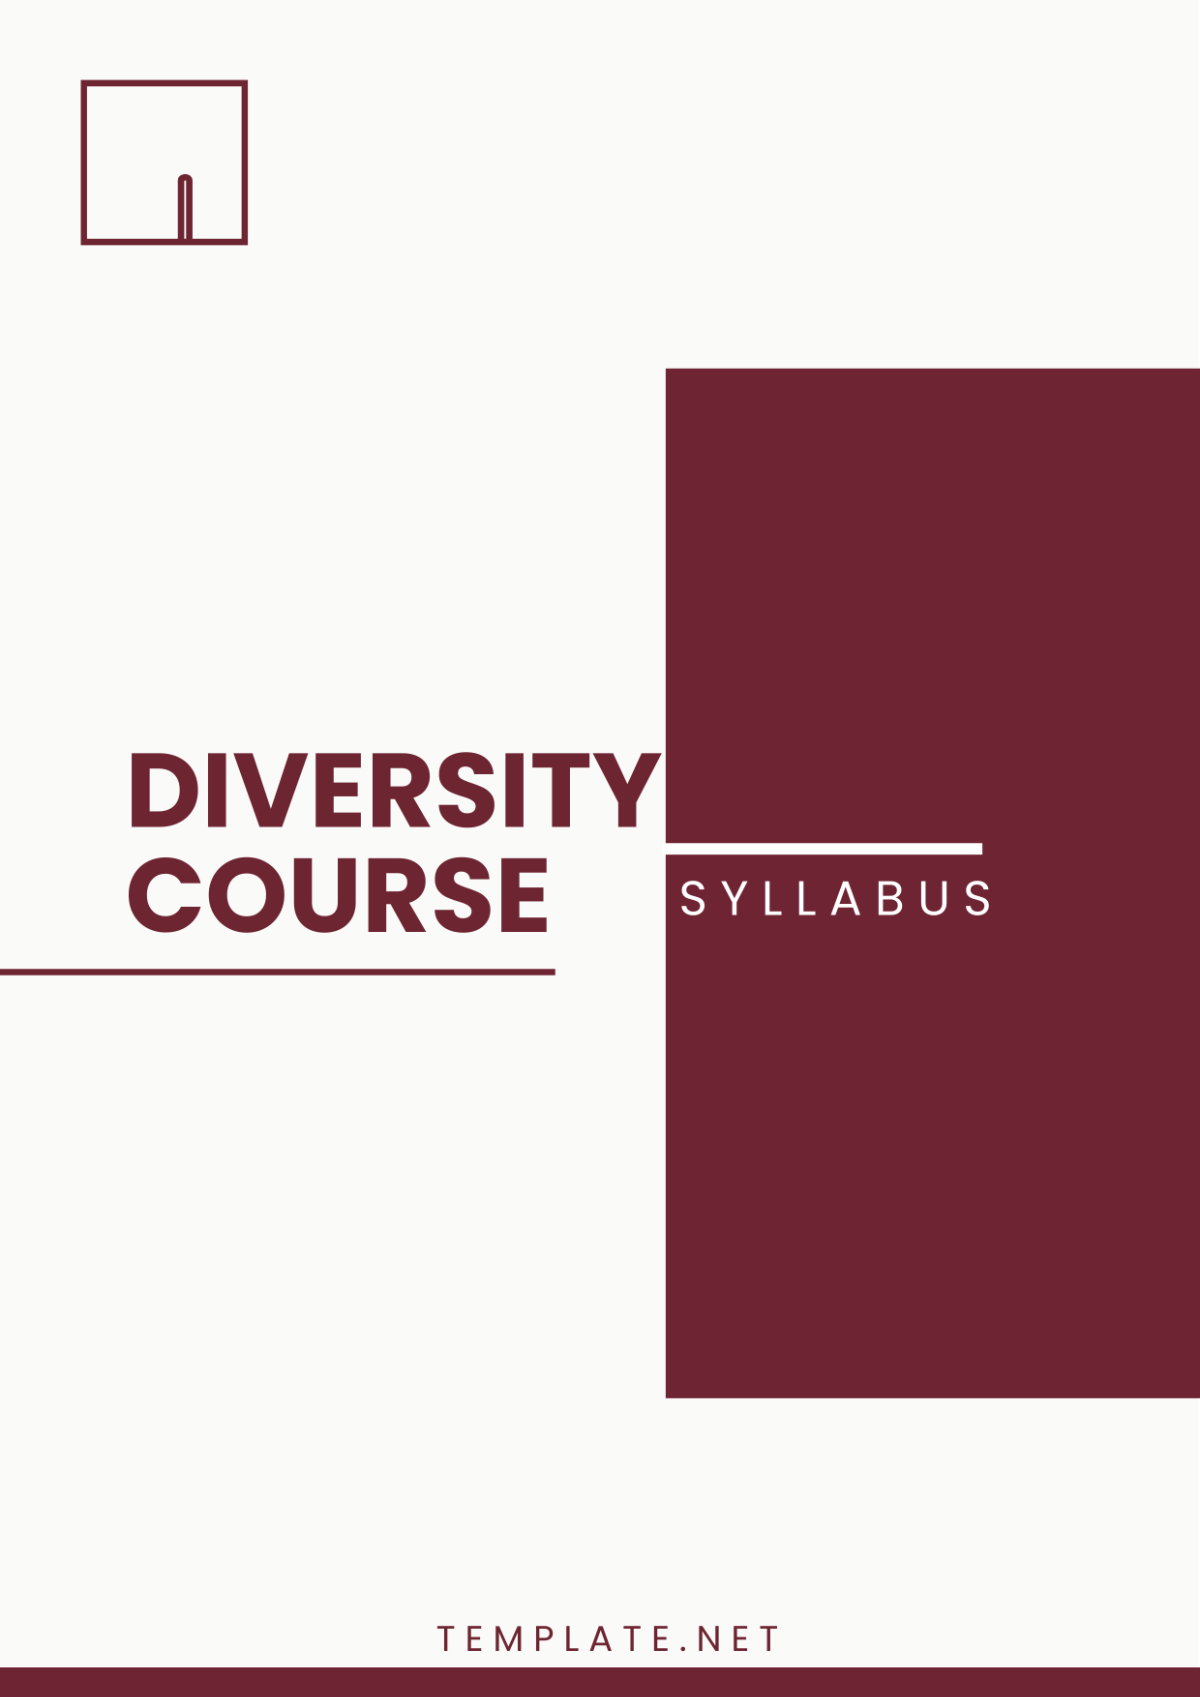 Free Diversity Course Syllabus Template